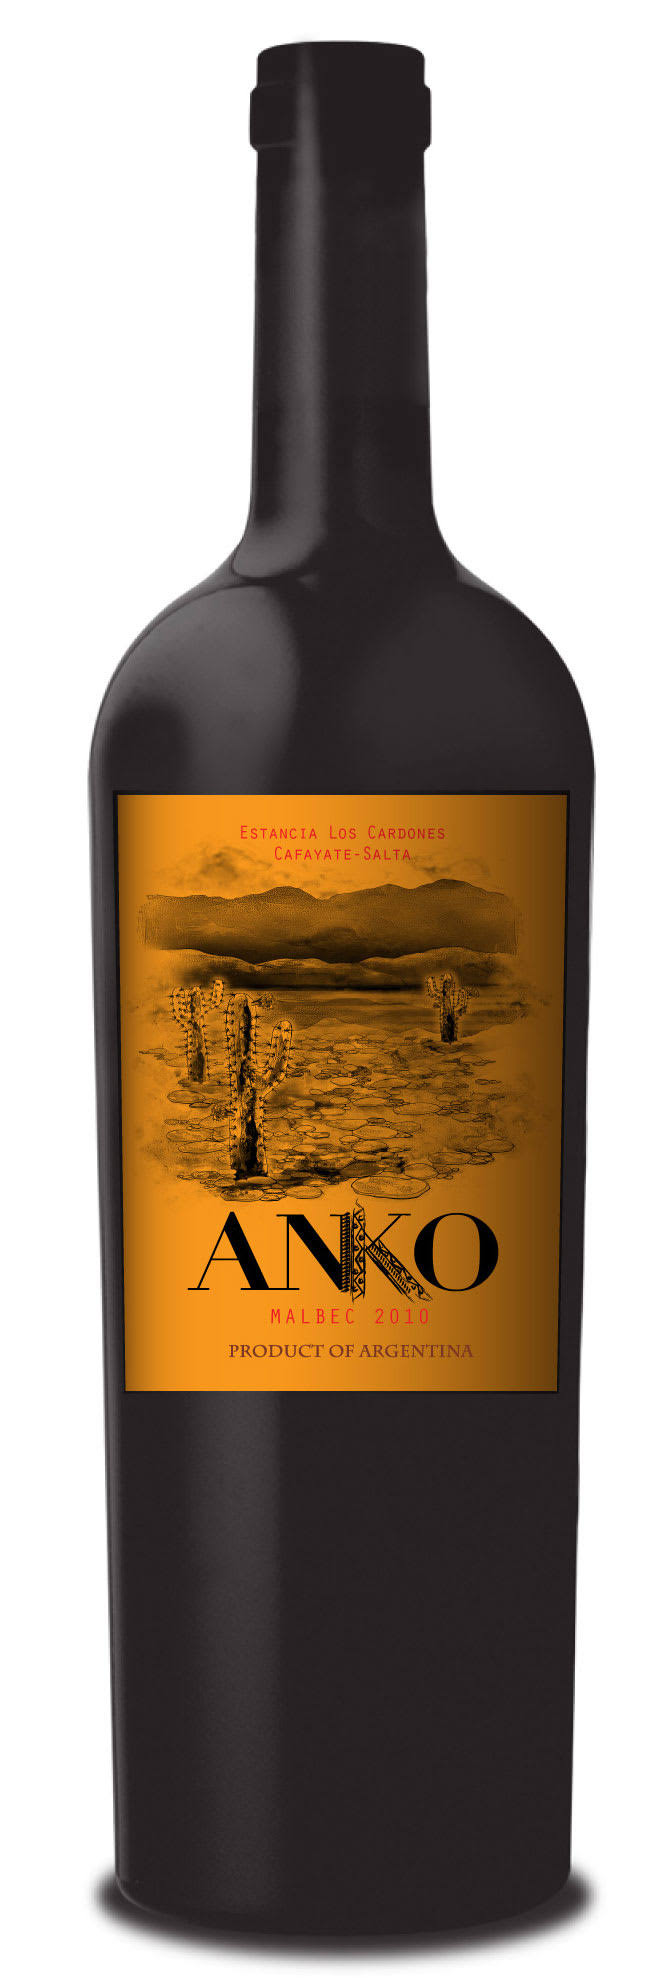 Anko Malbec, Argentina (Vintage Varies) - 750 ml bottle